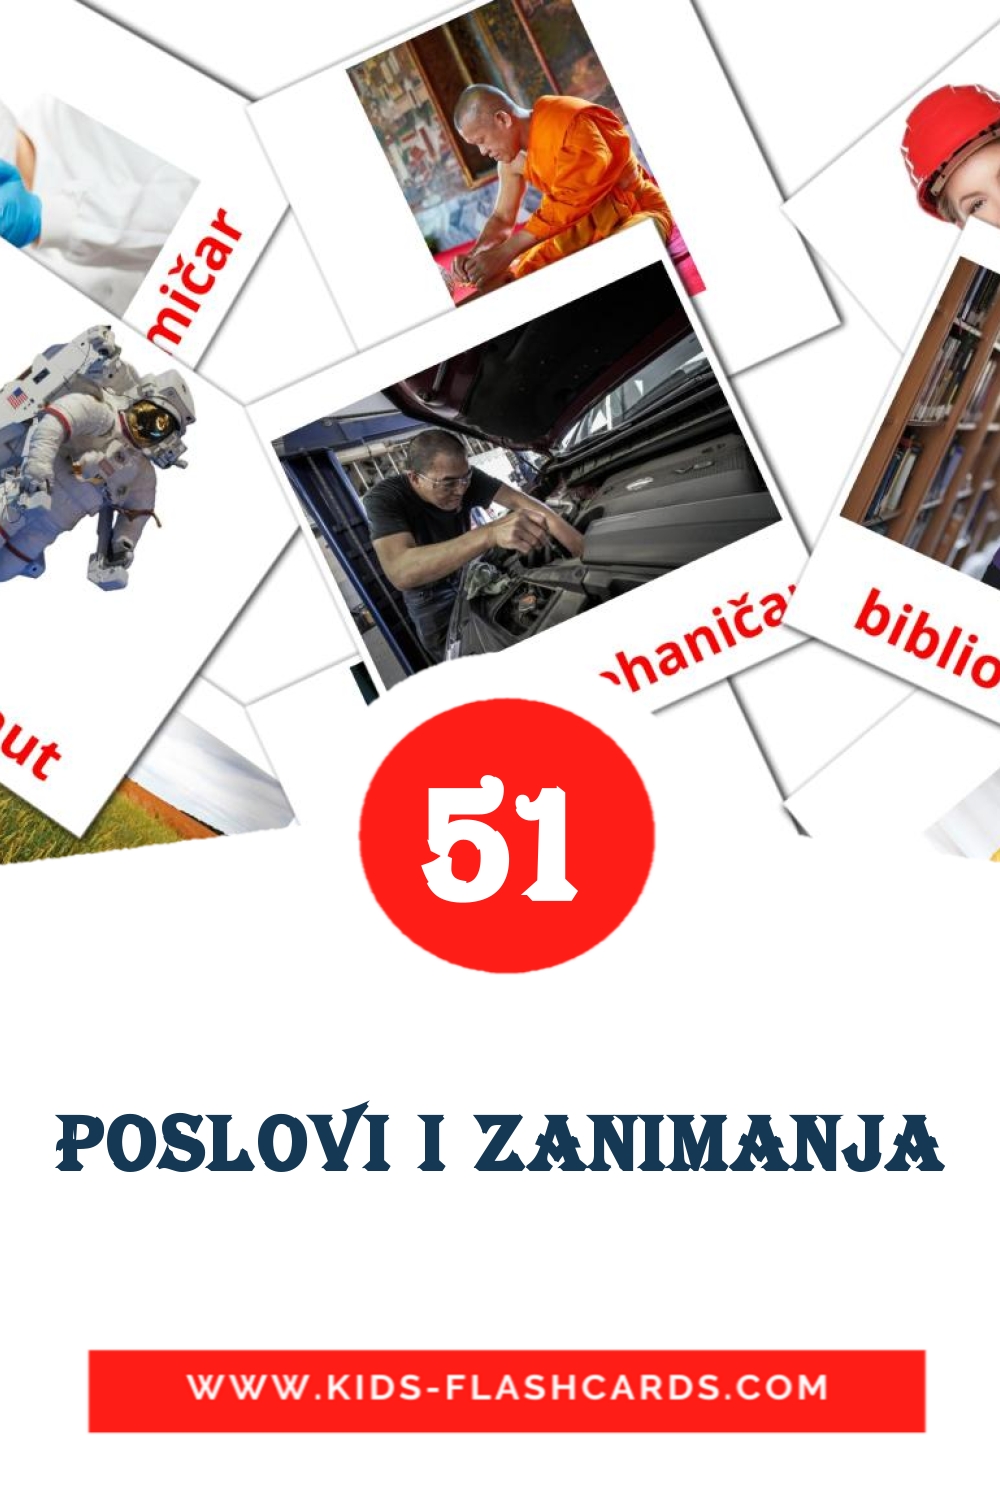 51 carte illustrate di Poslovi i zanimanja per la scuola materna in serbo